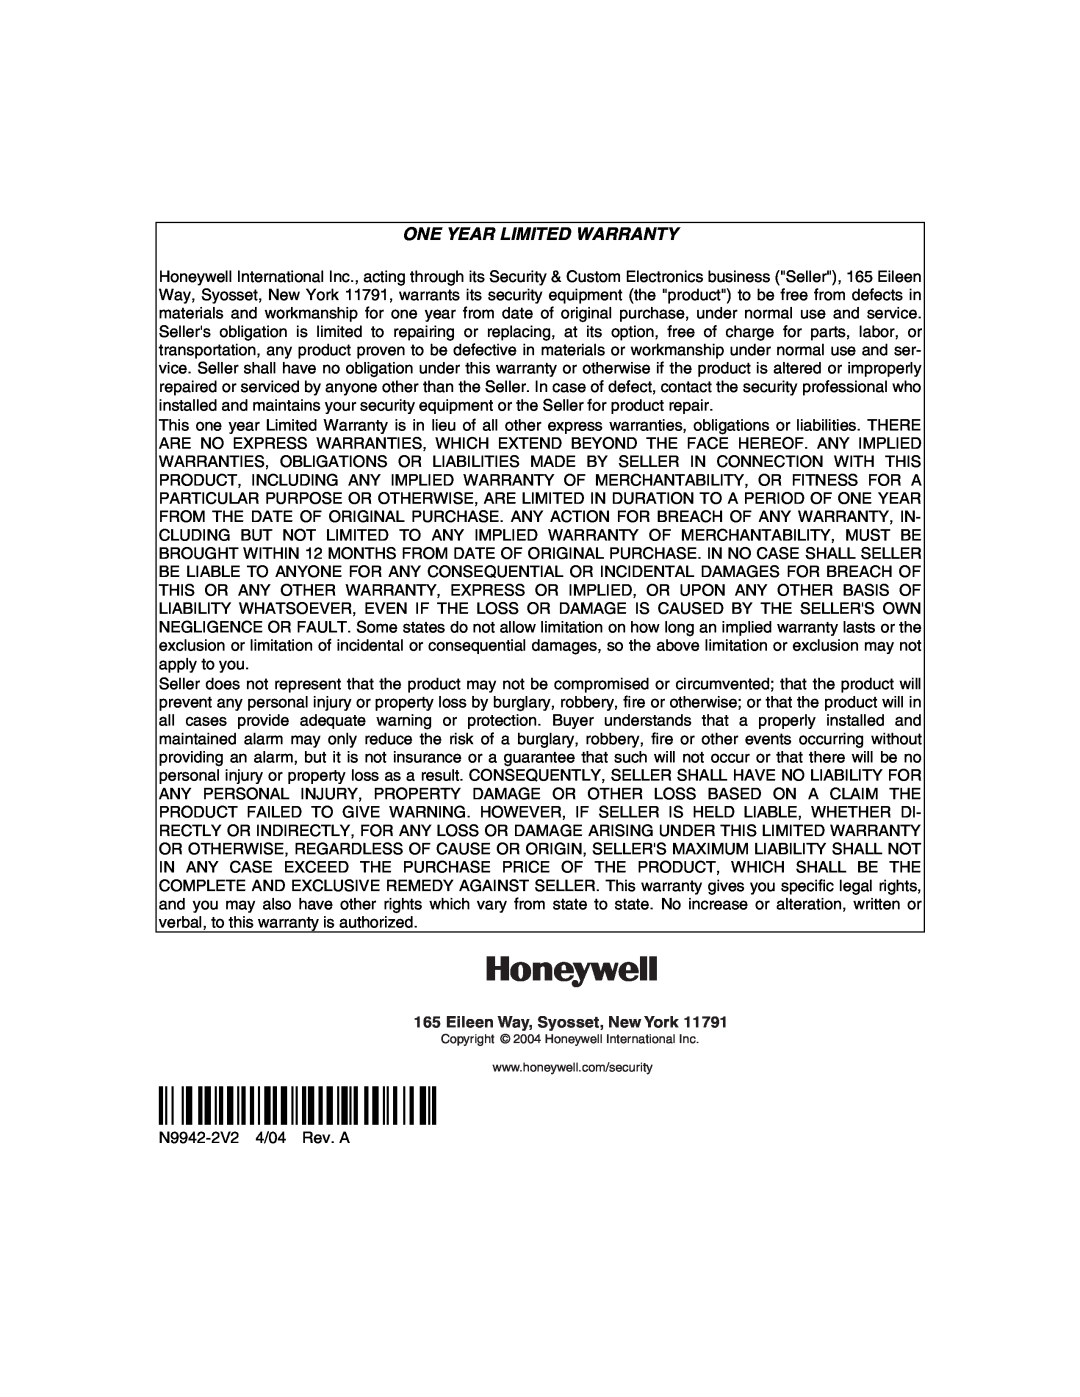 Honeywell 408EU manual ÊN9942-2V2ÁŠ, One Year Limited Warranty, Eileen Way, Syosset, New York 